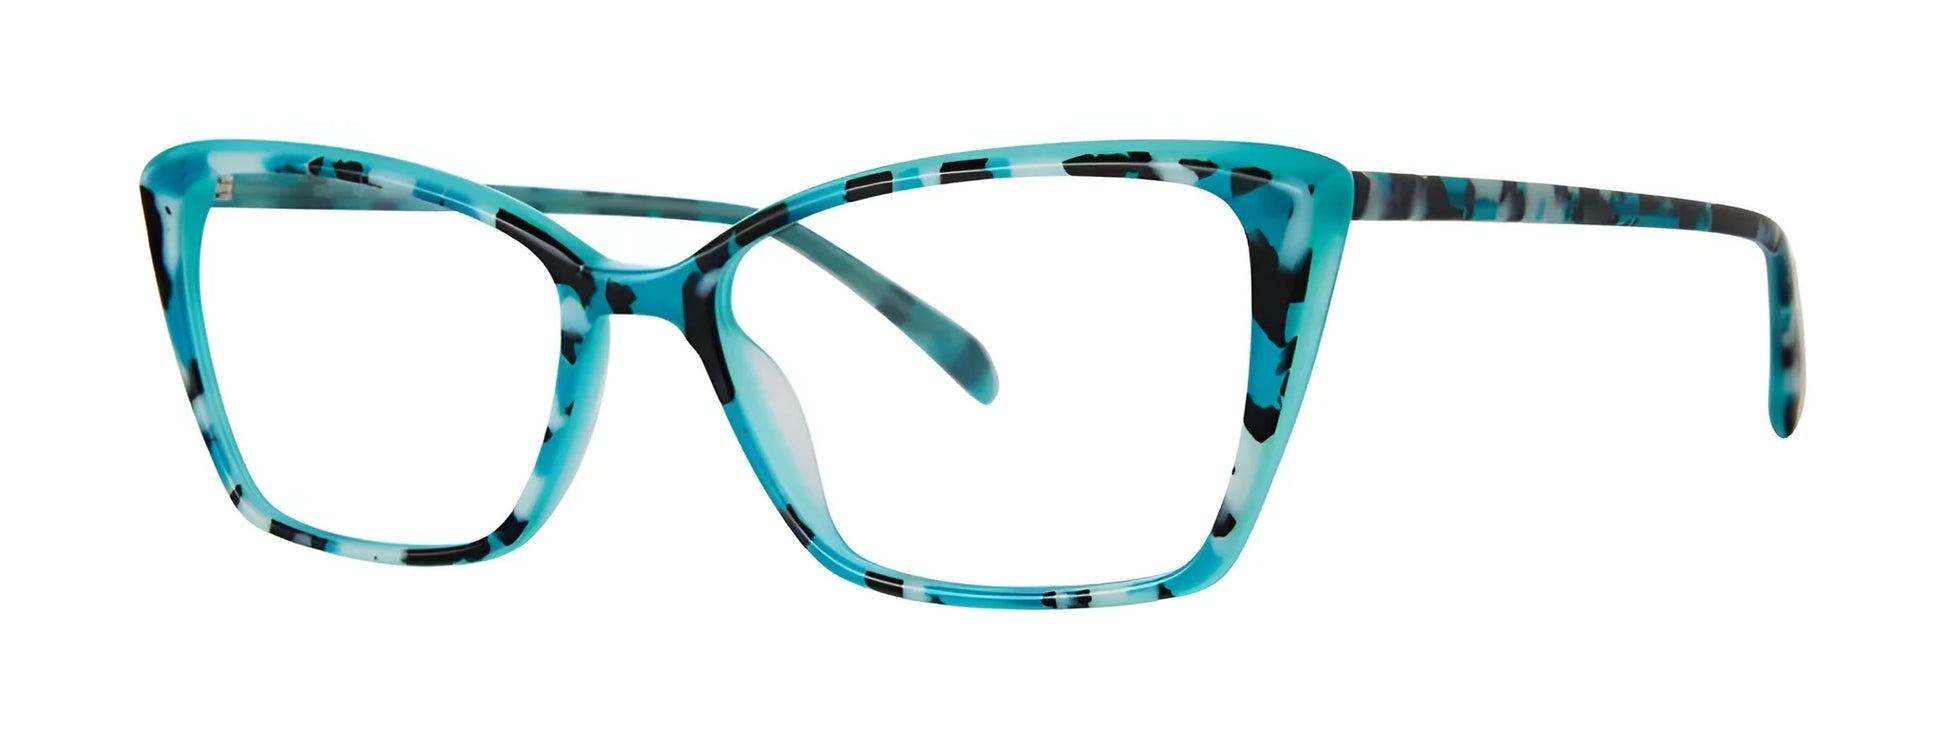 OGI POLAR VORTEX Eyeglasses Turquoise Tortoise